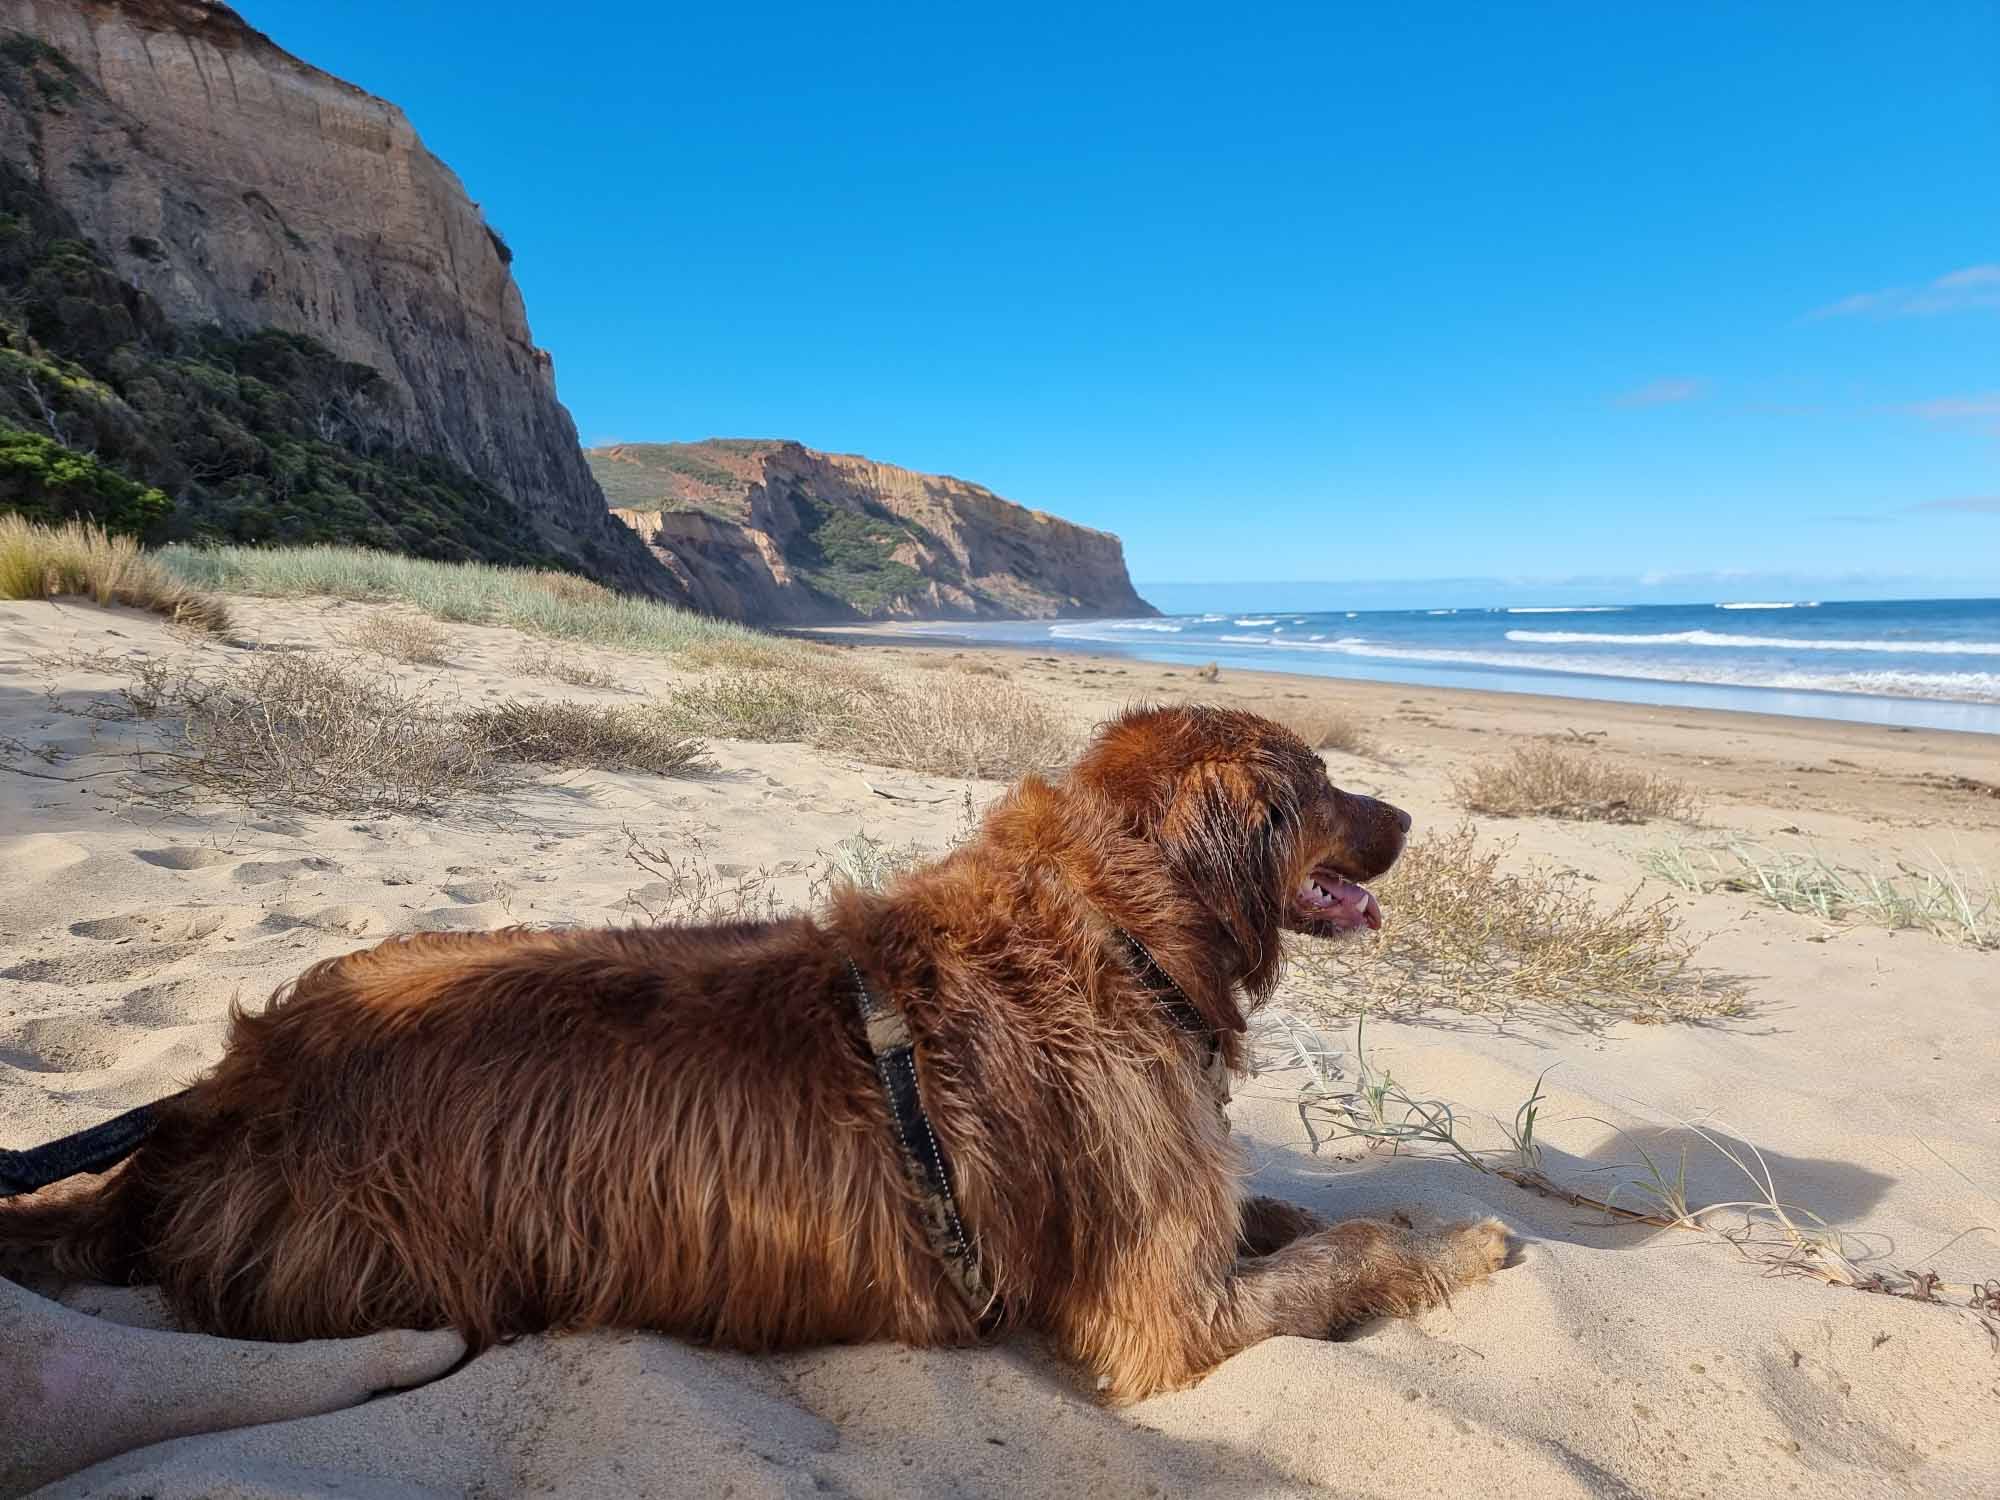 Red golden dog on sandy beach with cliffs in background